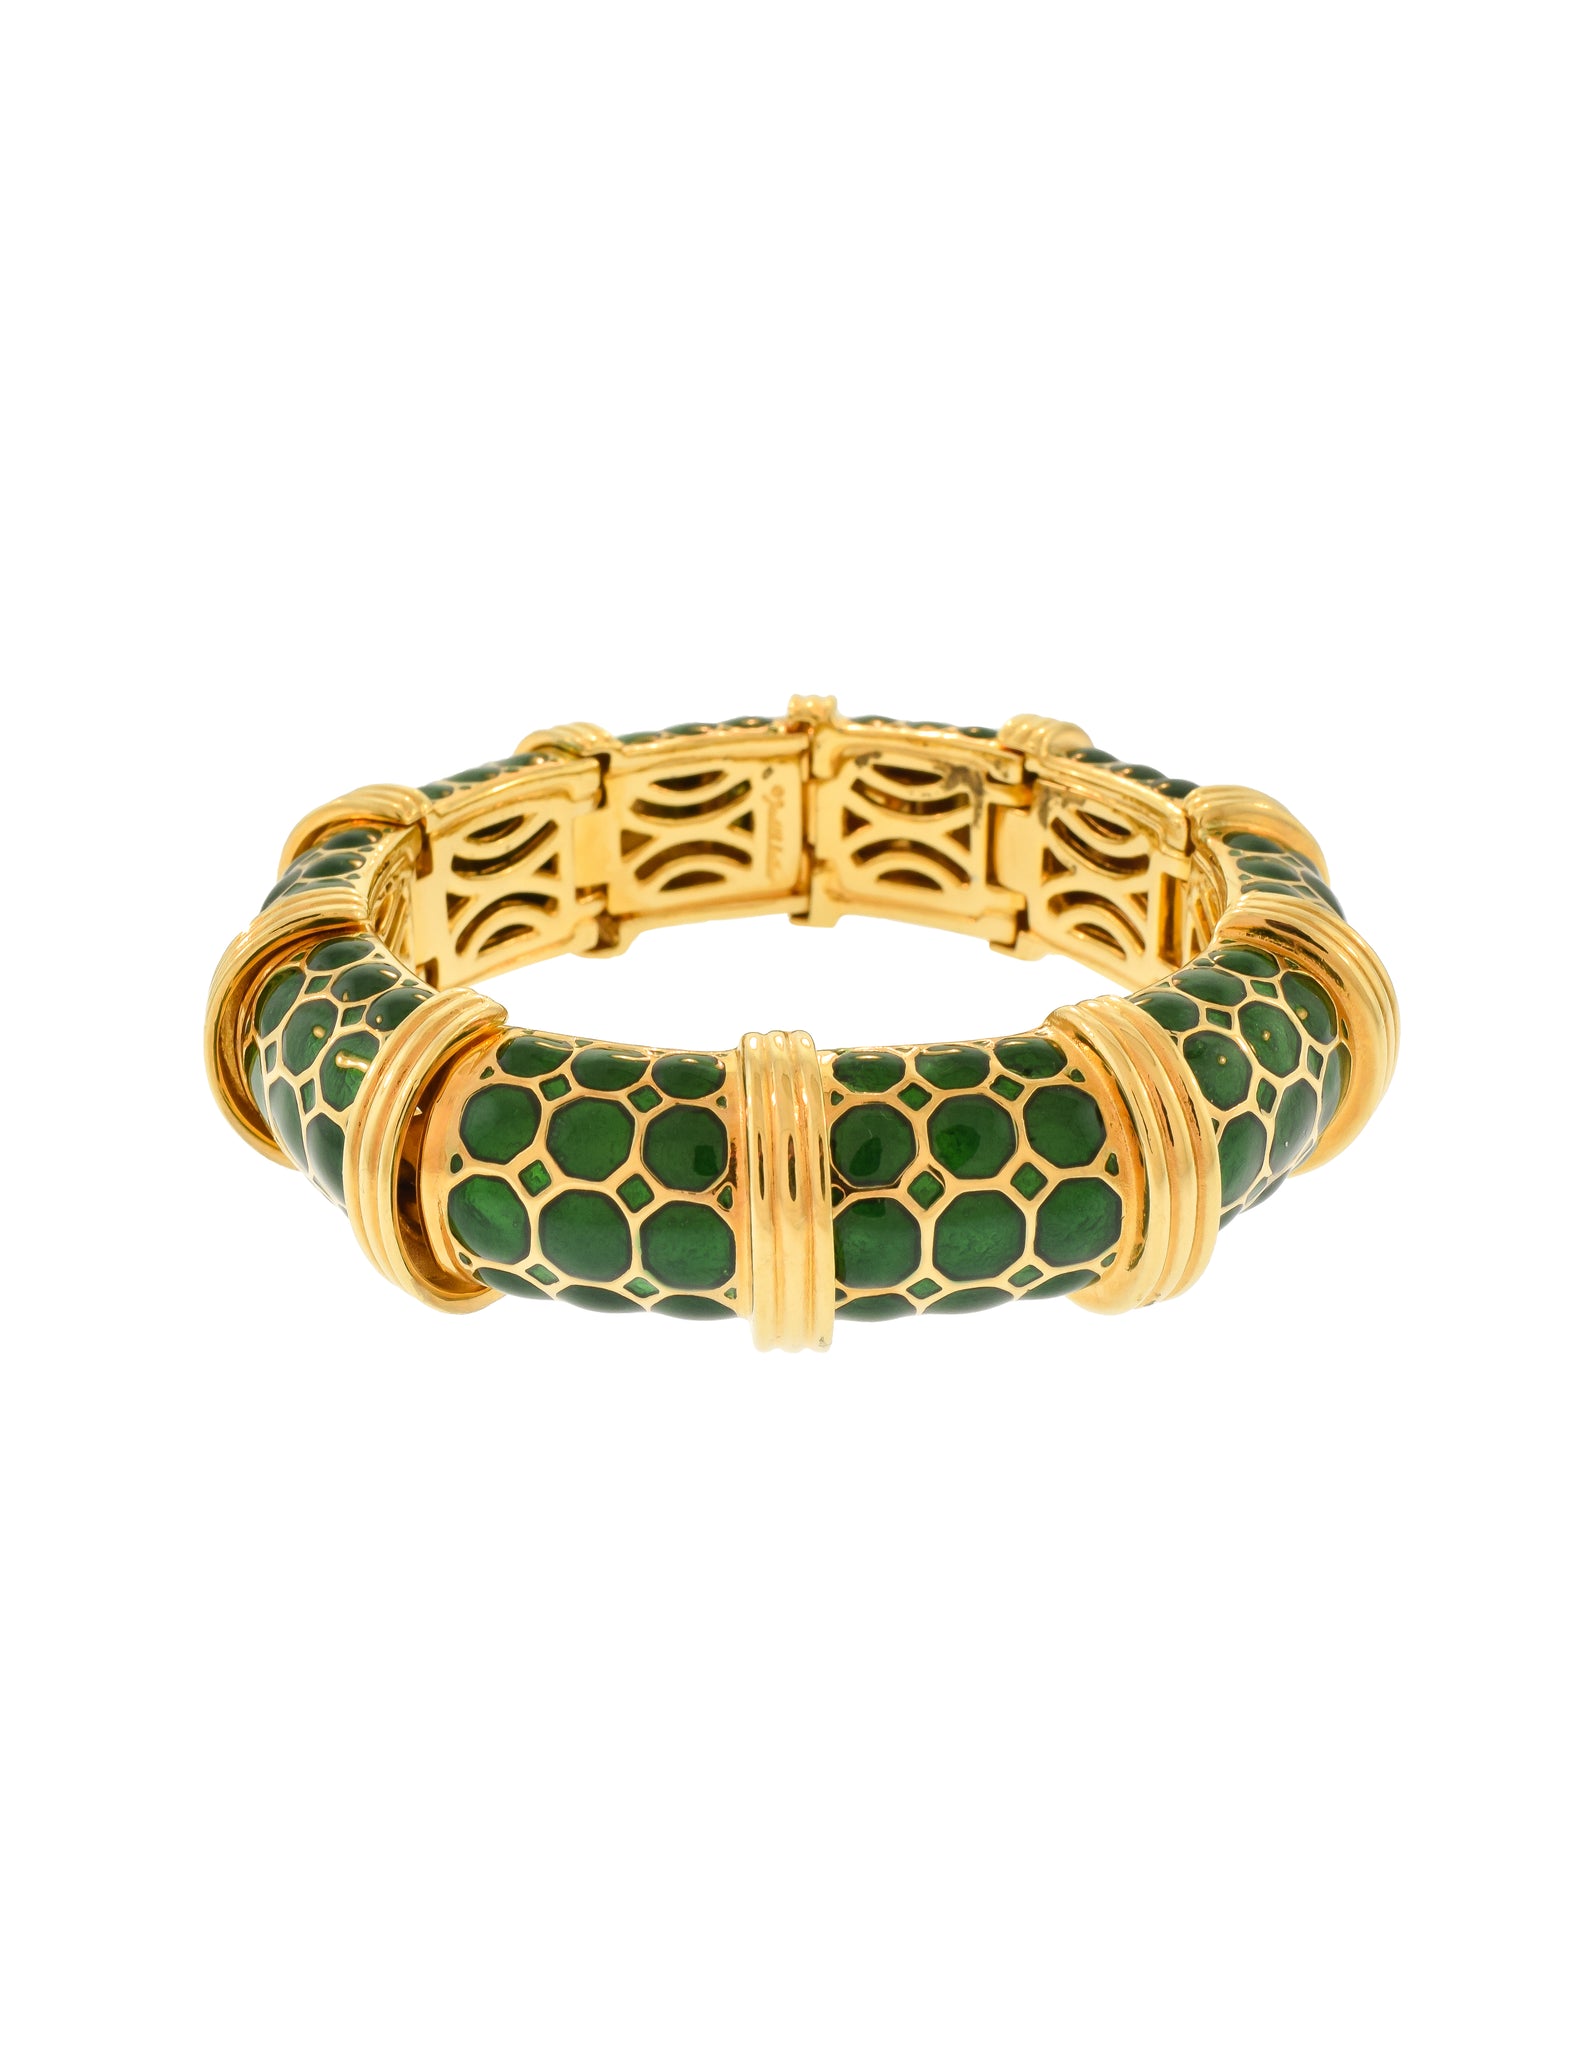 Judith Leiber Vintage Geometric Green Enamel Gold Bracelet